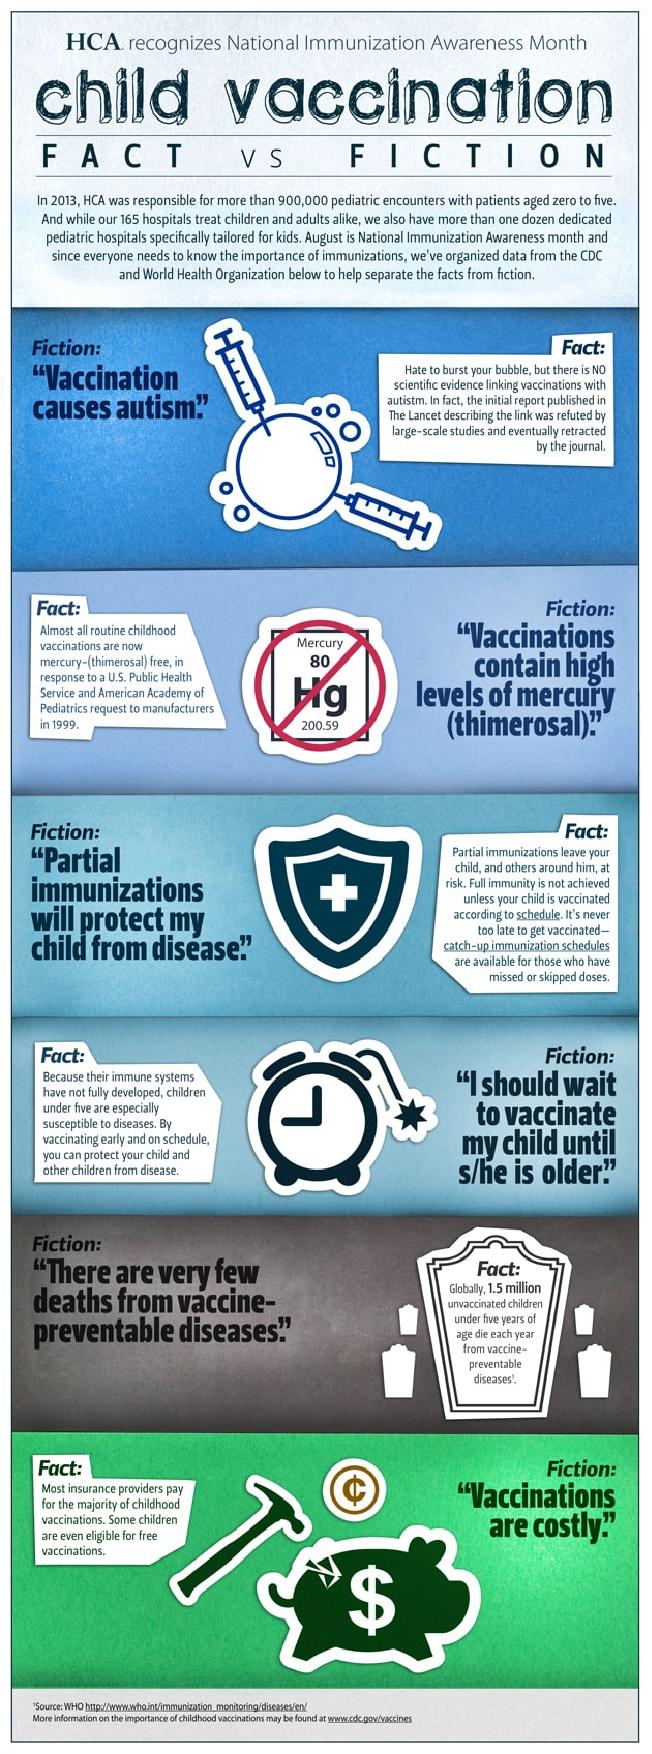 Child Vaccination Fact vs Fiction